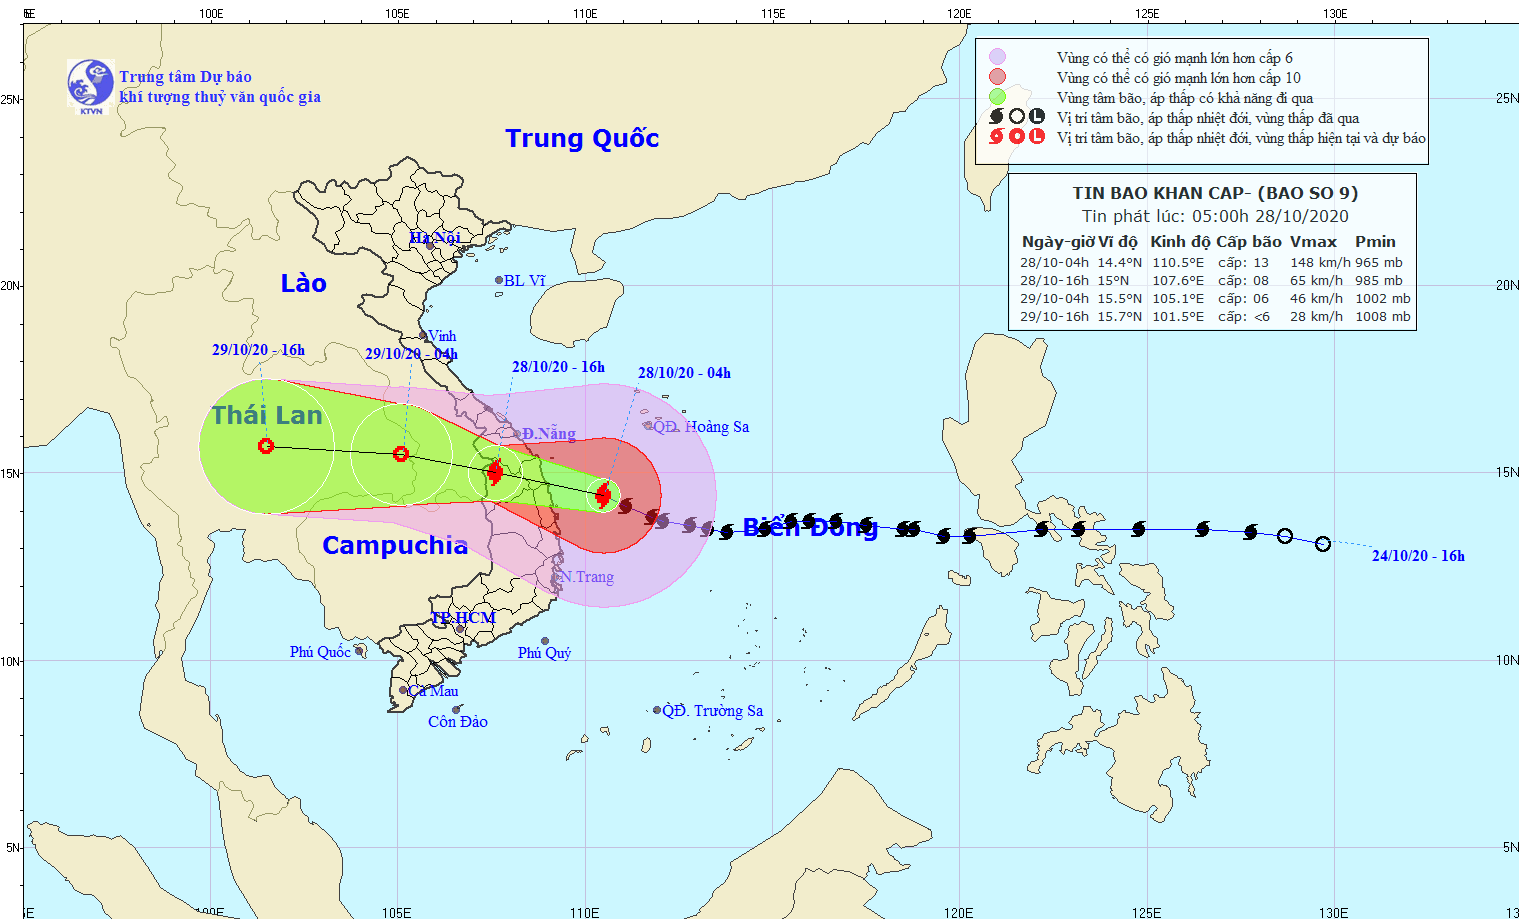 Storm Molave making landfall in provinces from Da Nang to Phu Yen ảnh 2